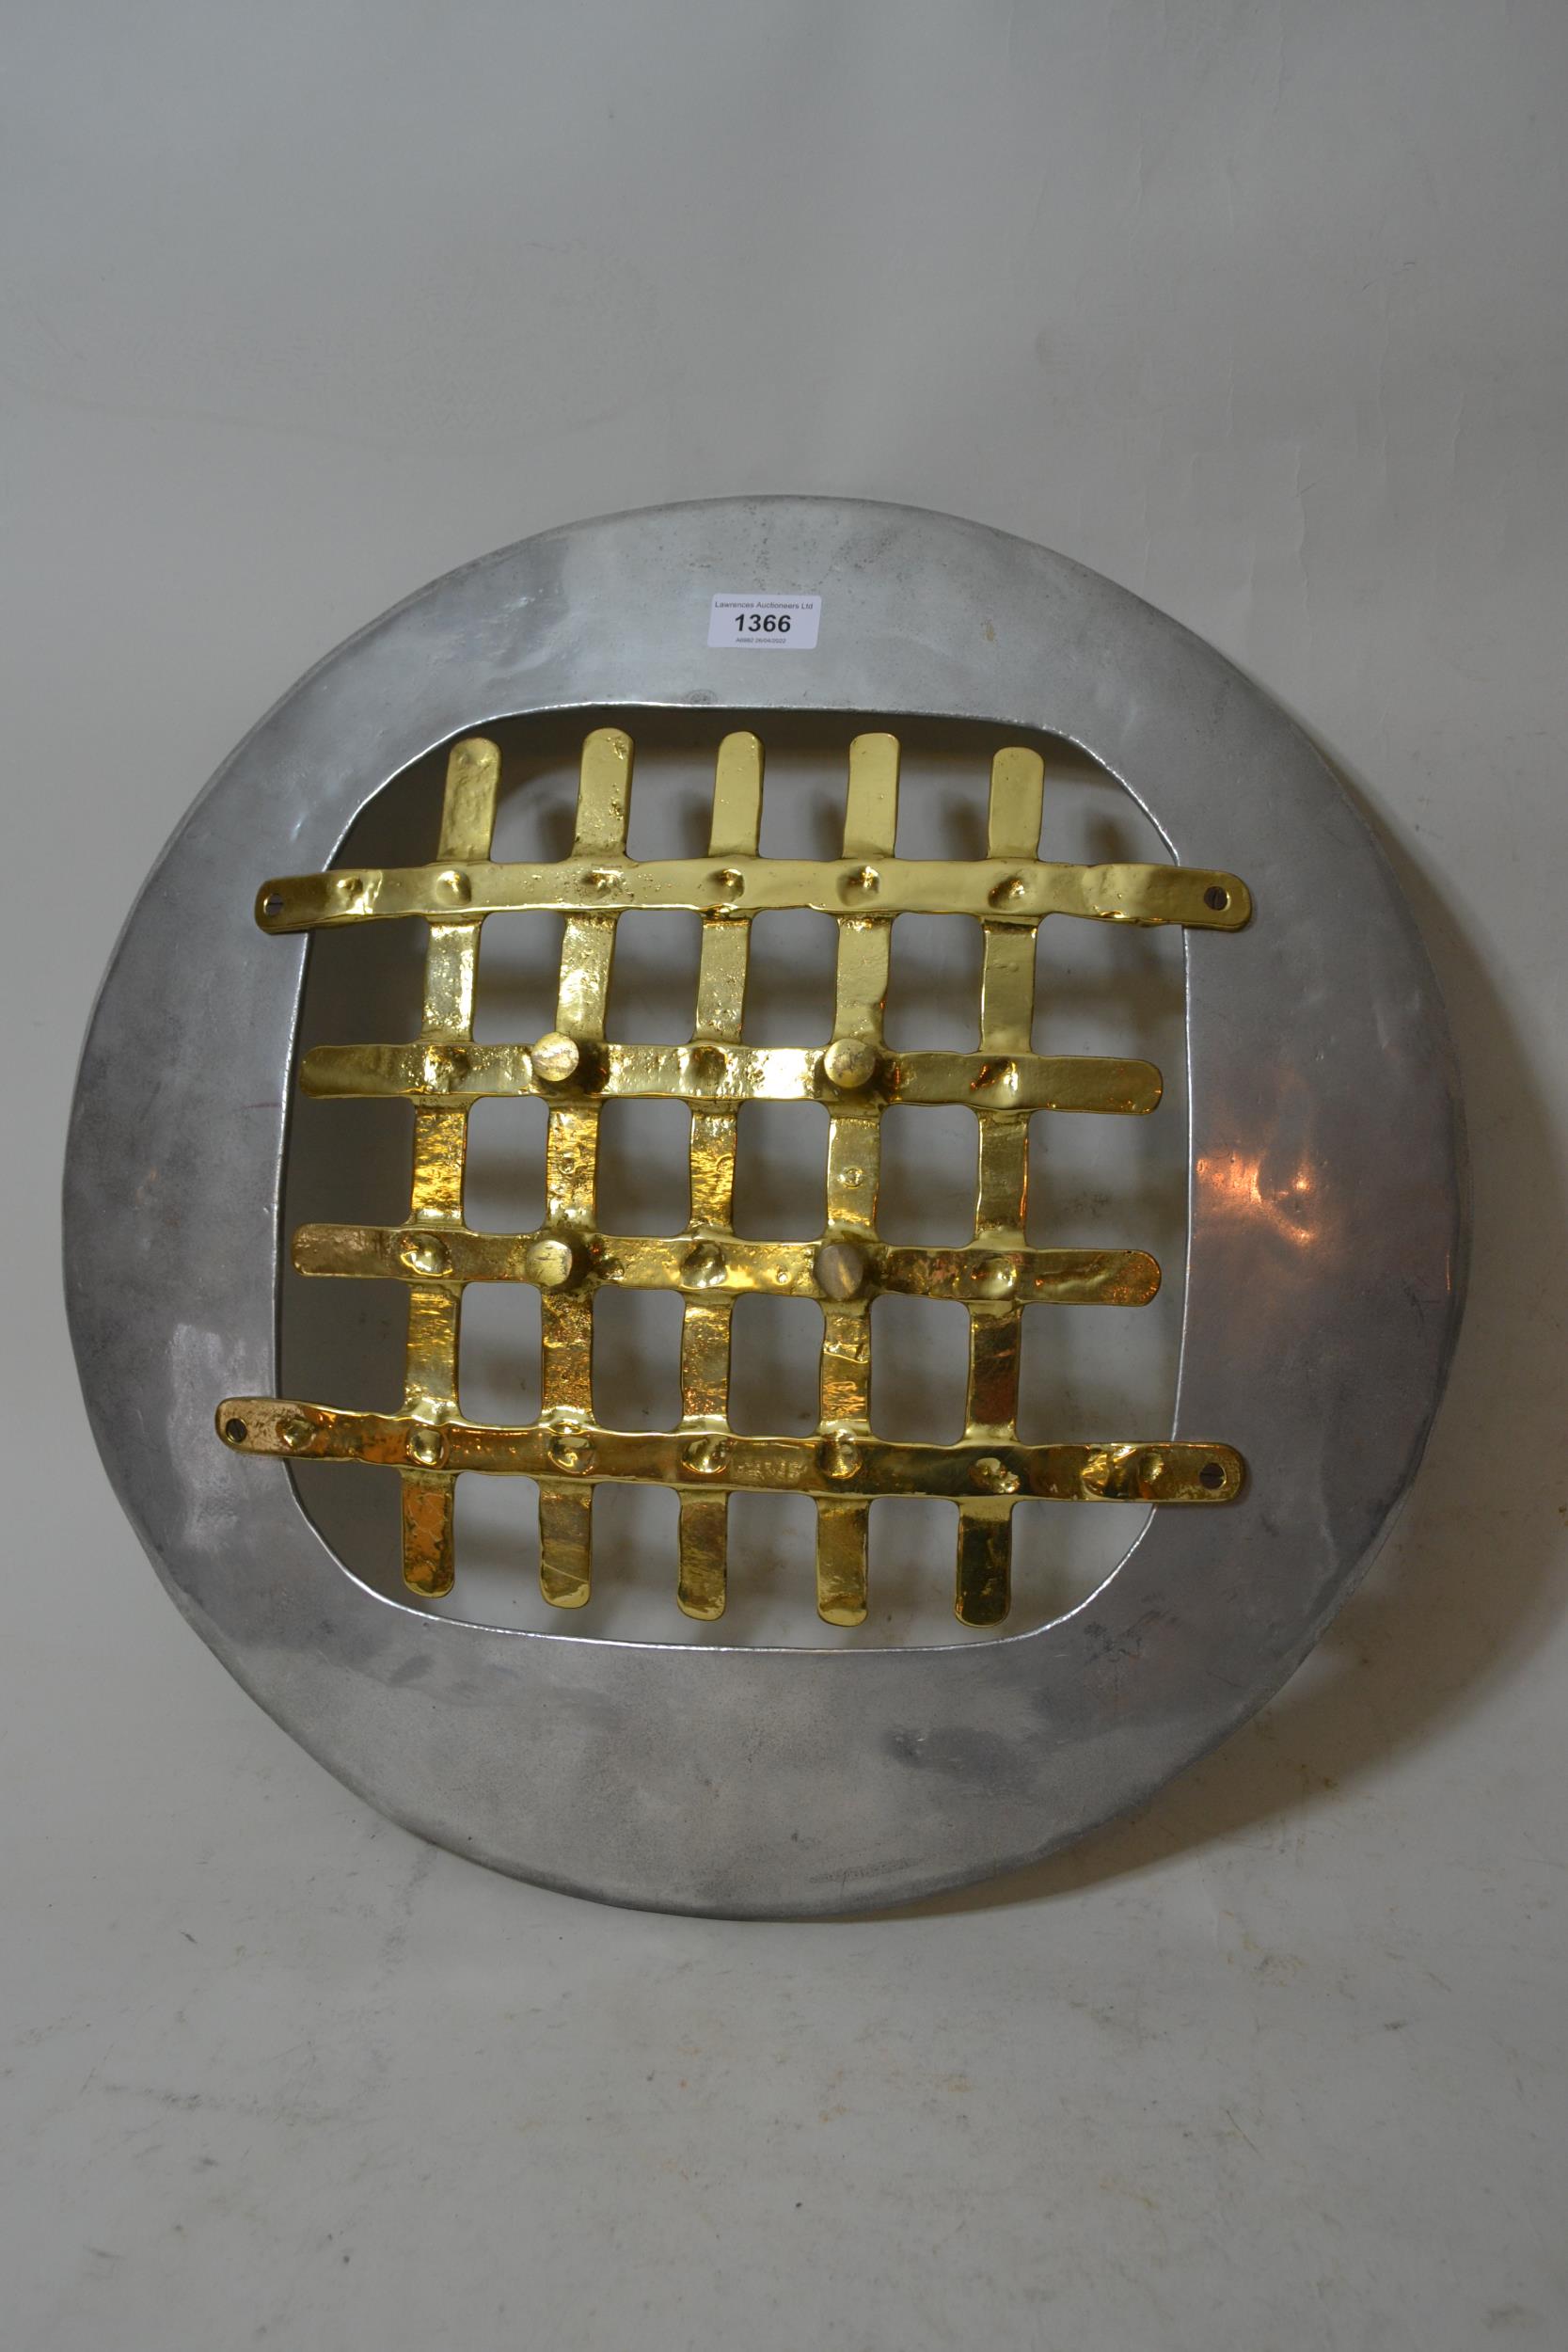 David Marshall, polished aluminium and brass wall plaque of circular pierced shield design, 19.75ins